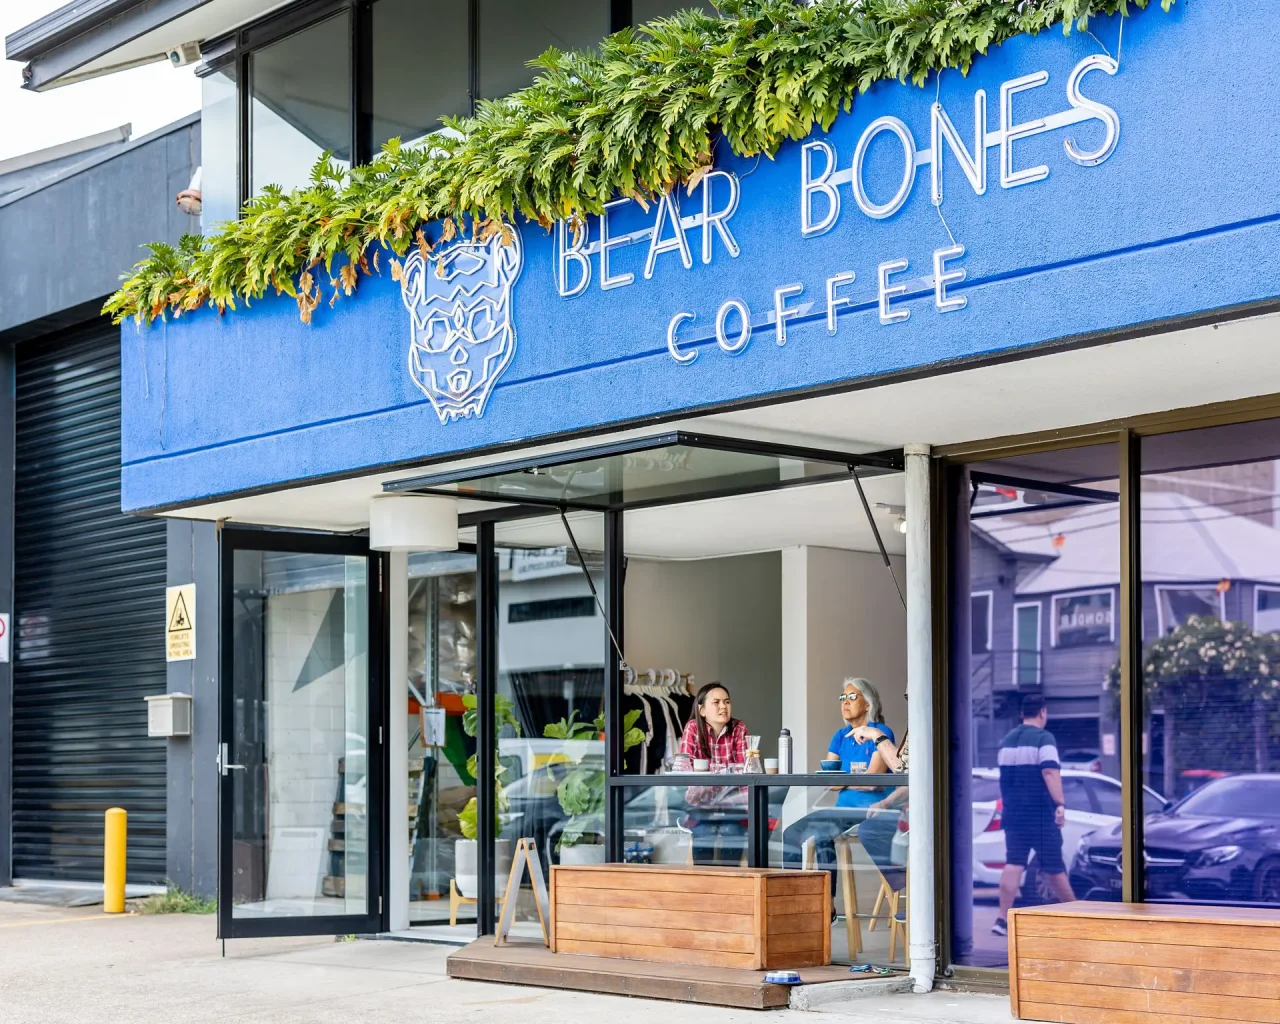 The storefront of Bear Bones Coffee Roaster in Australia